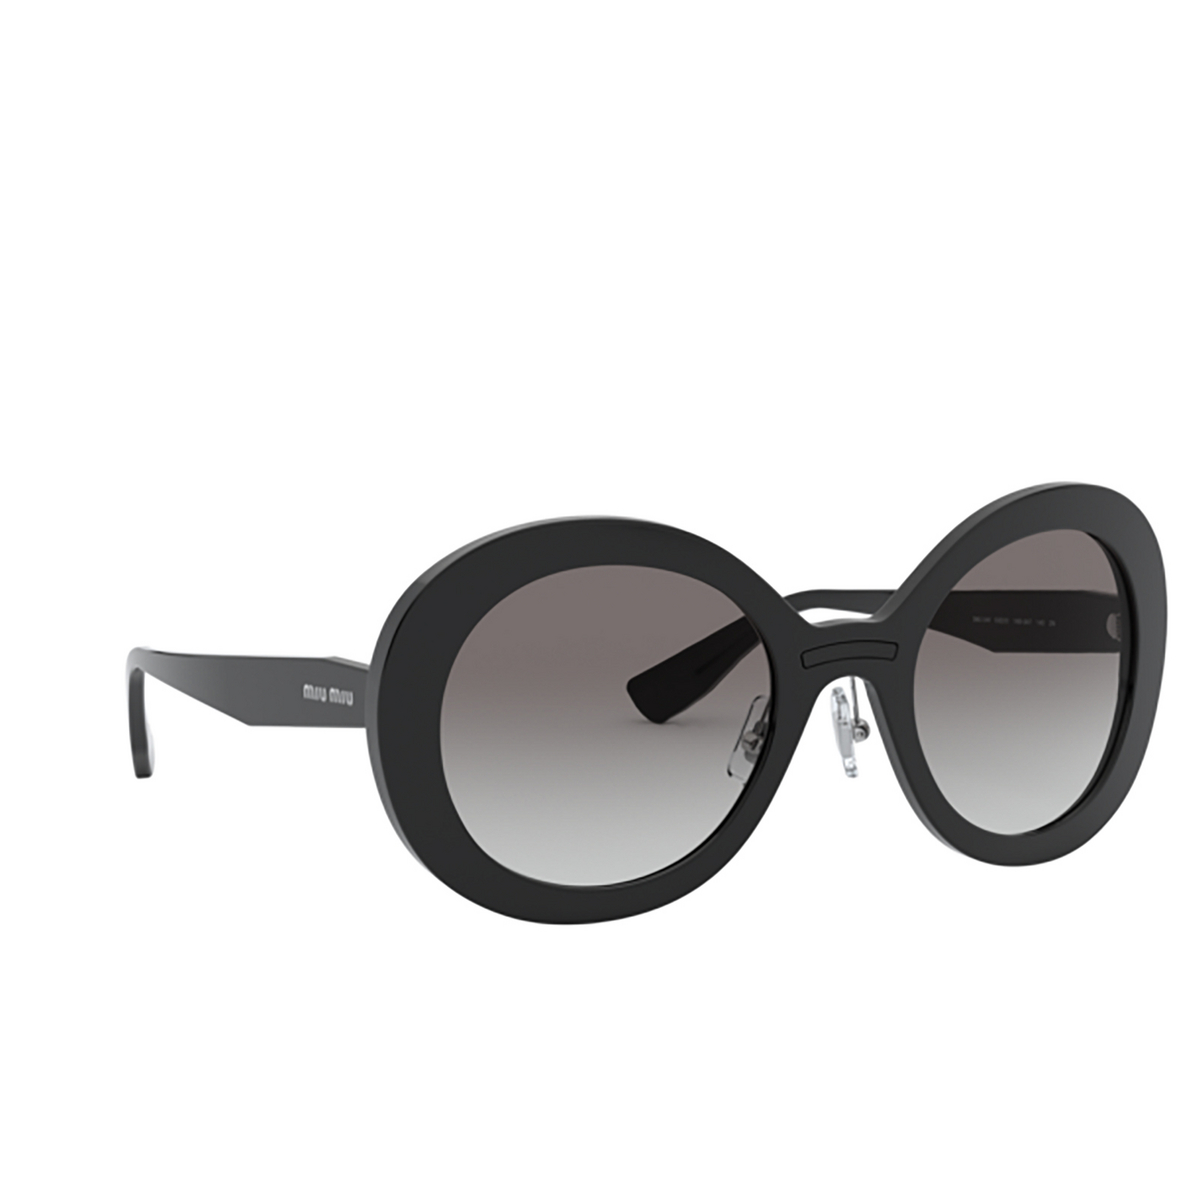 Miu Miu® Round Sunglasses: MU 04VS color Black 1AB0A7 - three-quarters view.